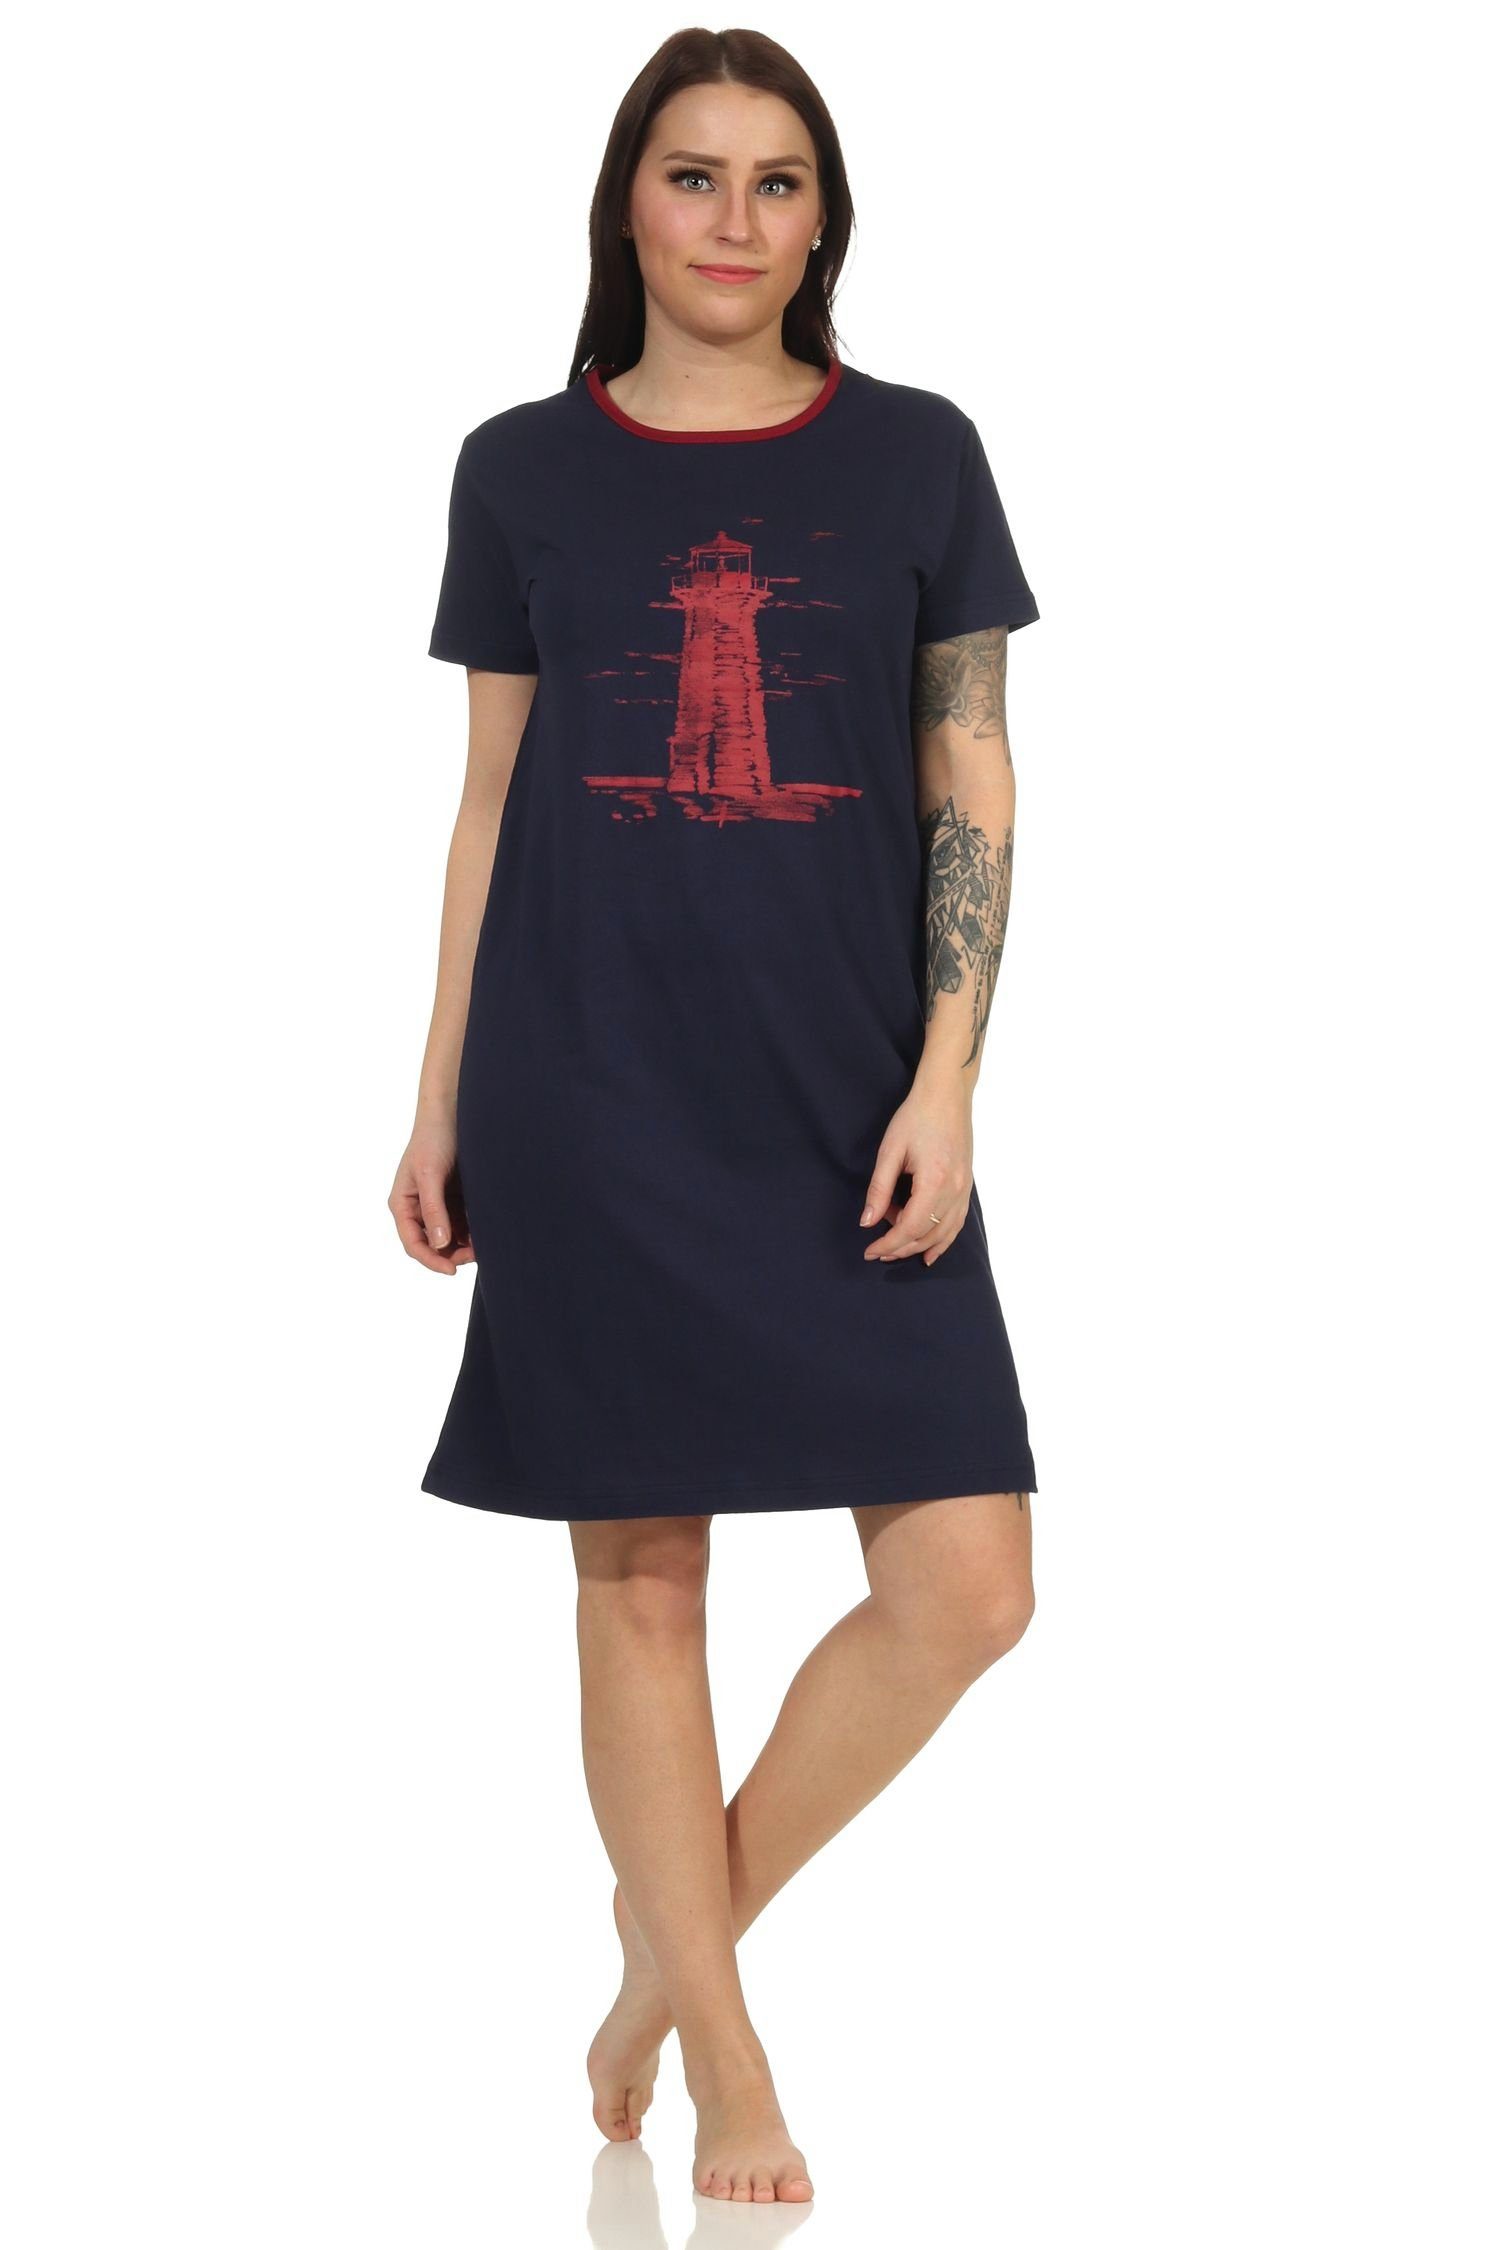 RELAX by Normann Nachthemd Damen maritimen navy Nachthemd Motiv Leuchtturm Look im und kurzarm als